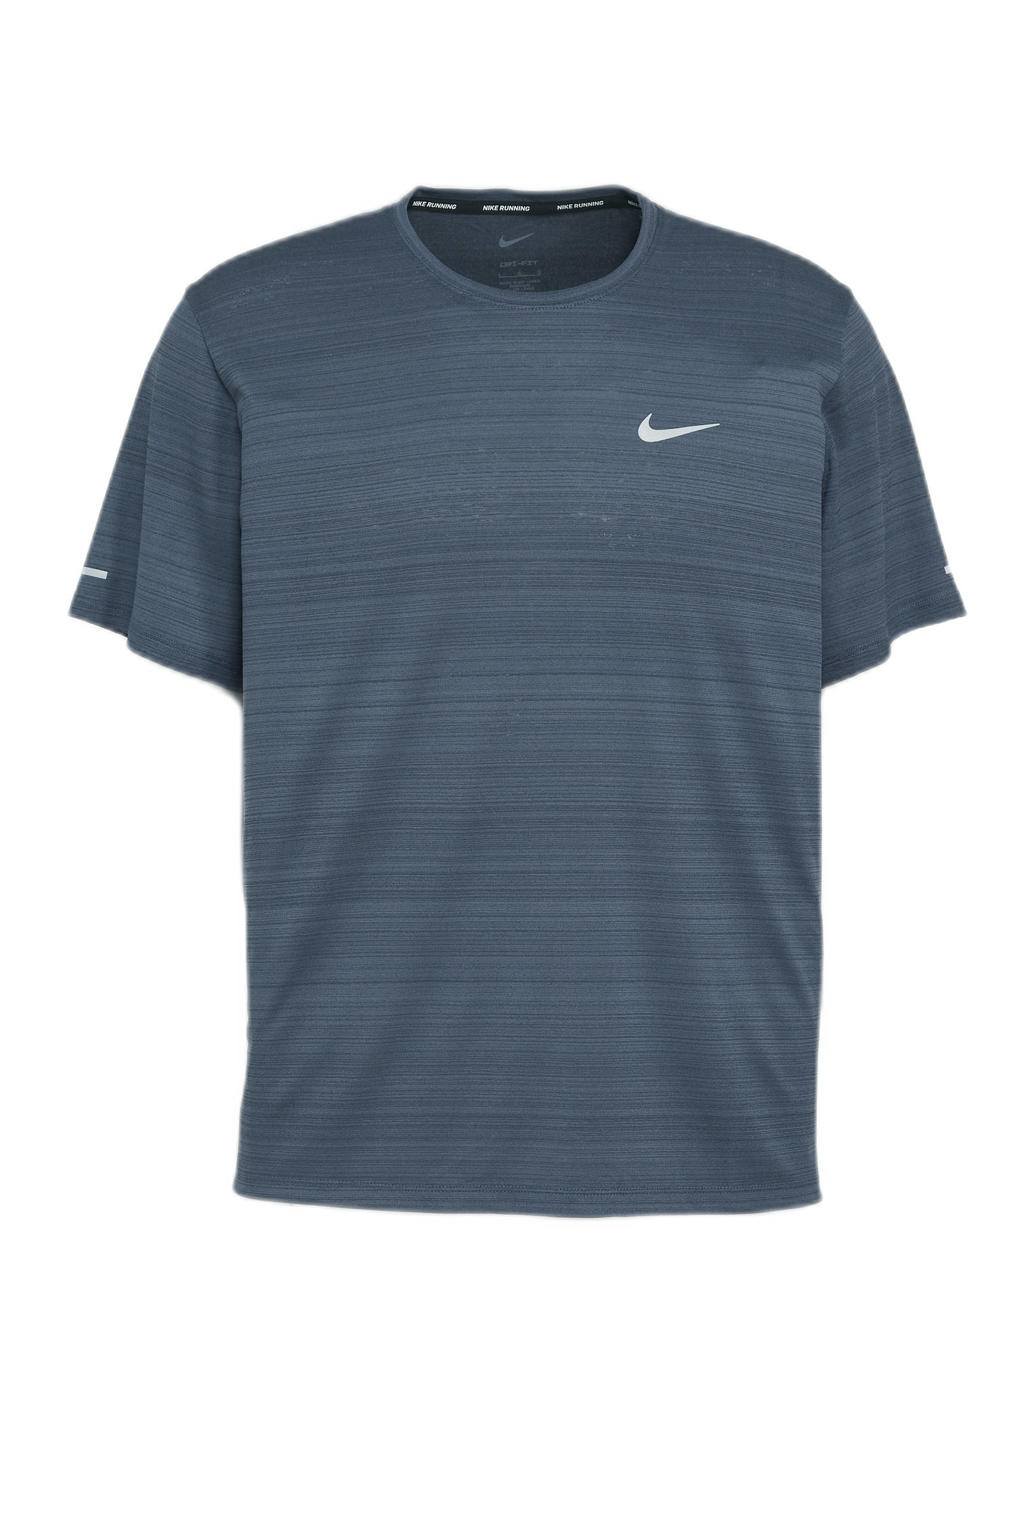 Donkerblauwe heren Nike hardloopshirt van polyester met korte mouwen en ronde hals